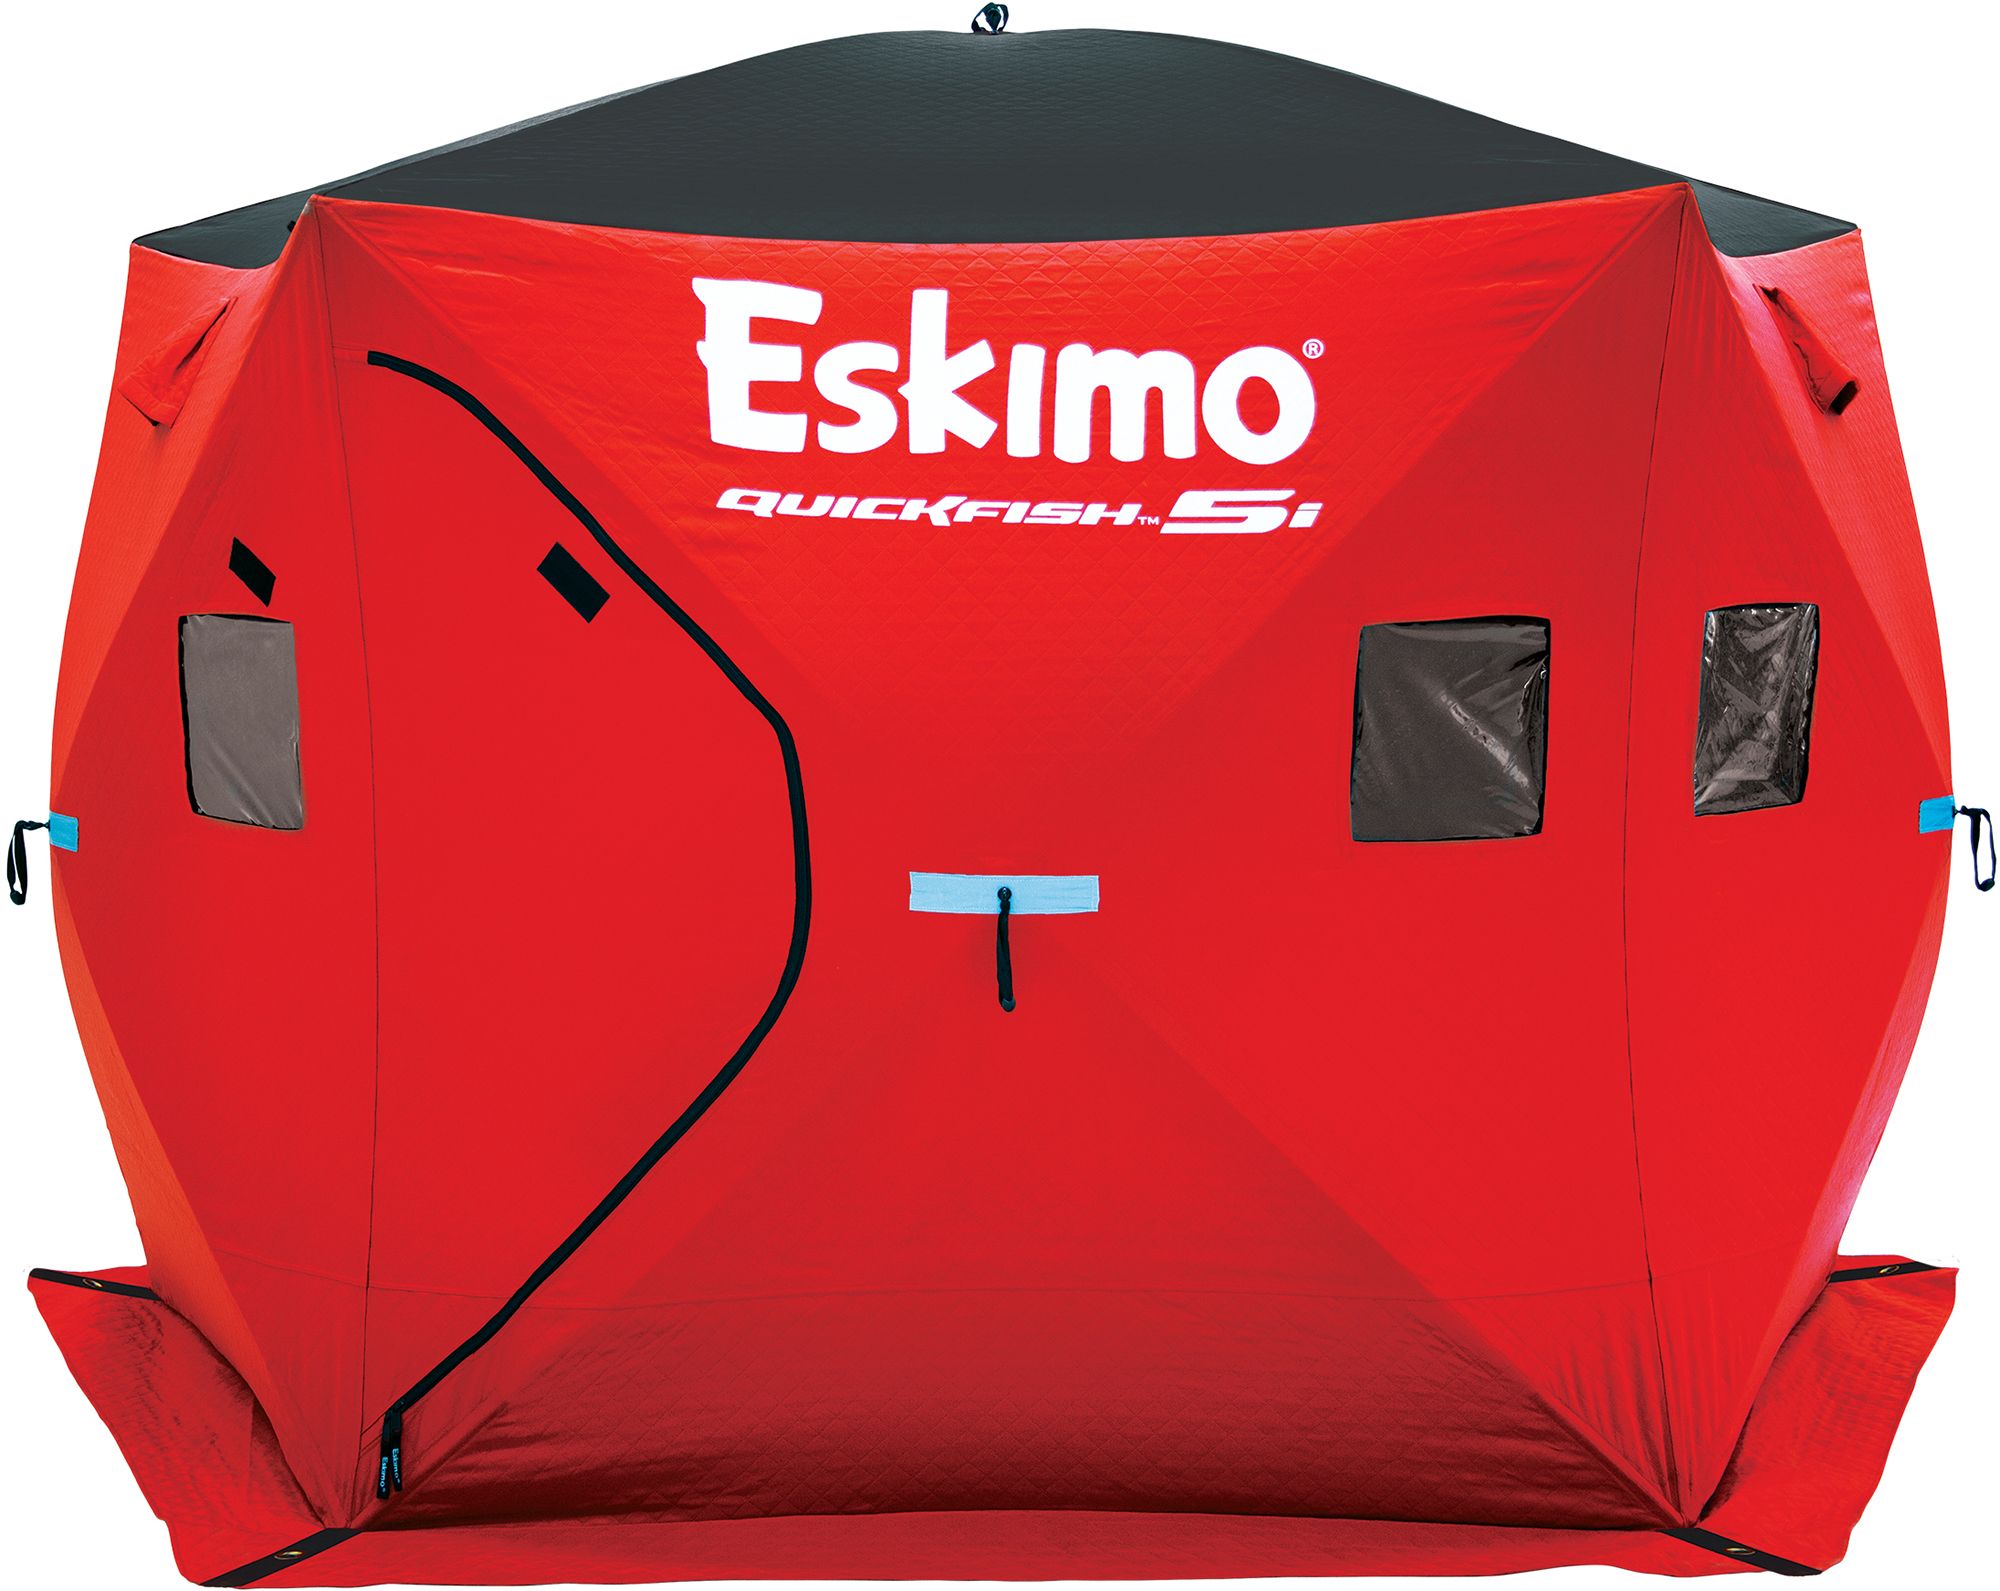 Eskimo Quickfish 3i Insulated Pop-Up Hub Shelter 41445